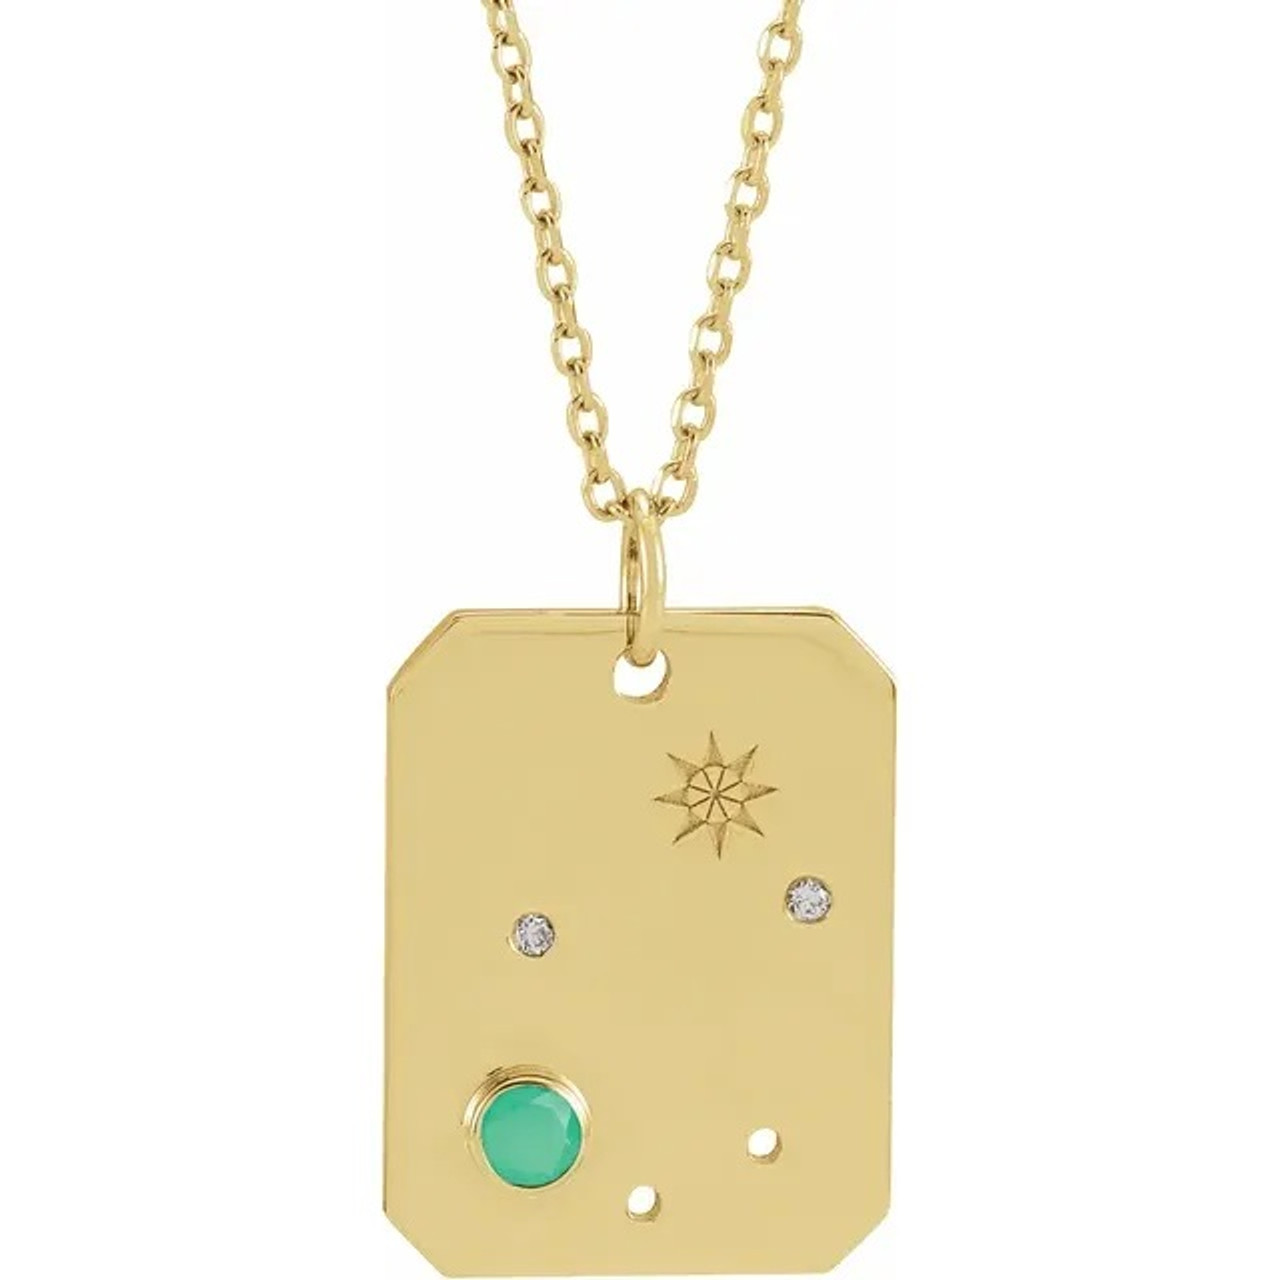 Precious Nanogram Tag Necklace - Luxury All Fashion Jewelry